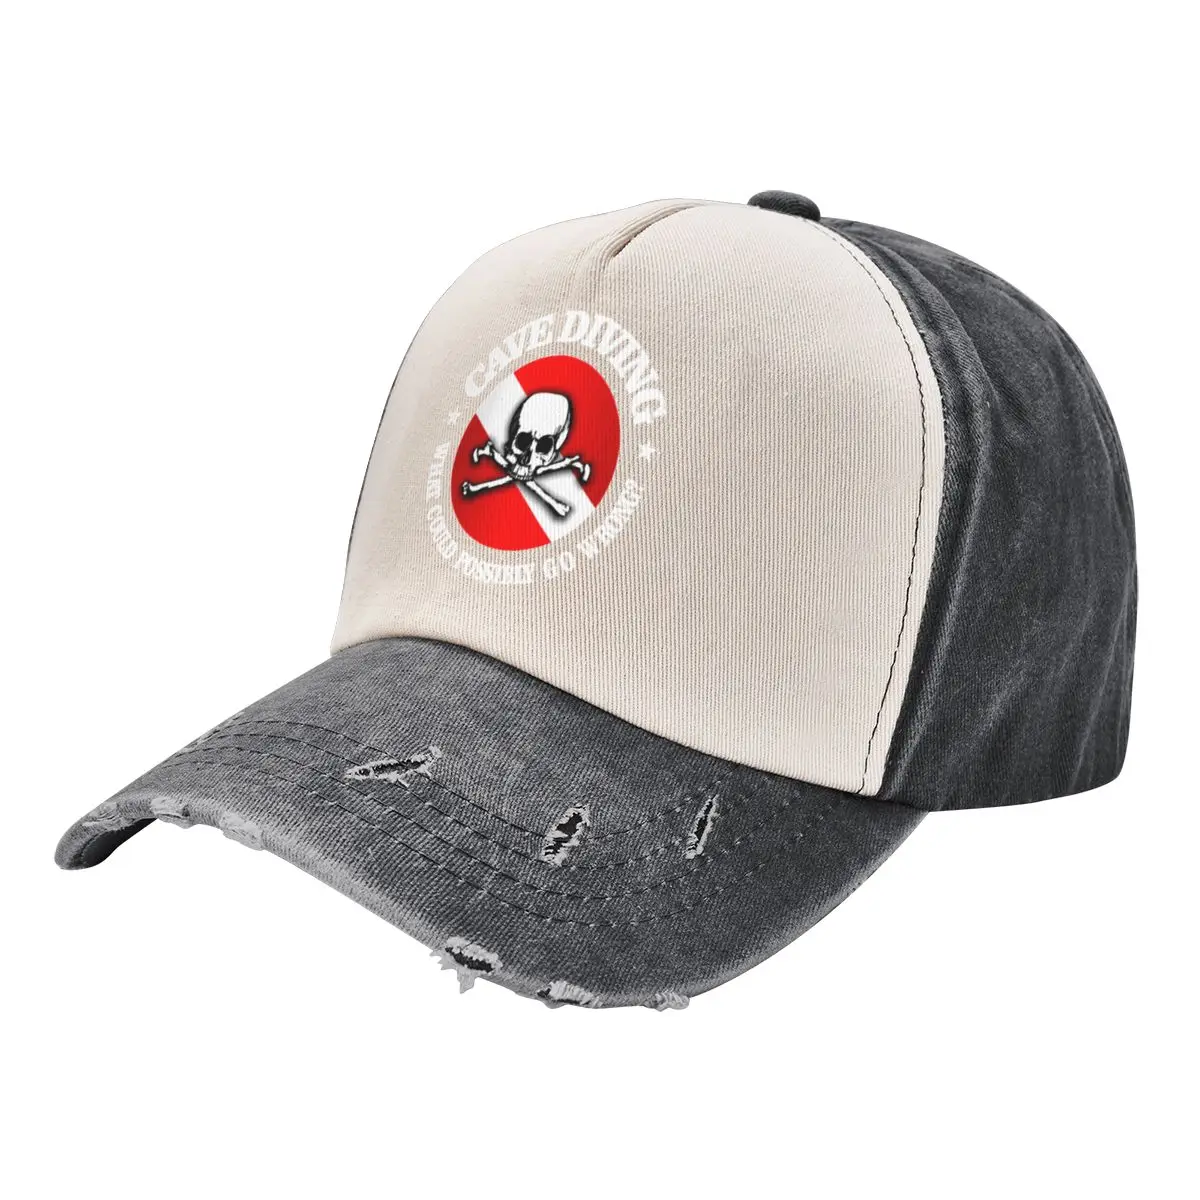 

Cave Diver (rd) Baseball Cap black Bobble Hat Hat Baseball Cap derby hat Trucker Hats For Men Women's